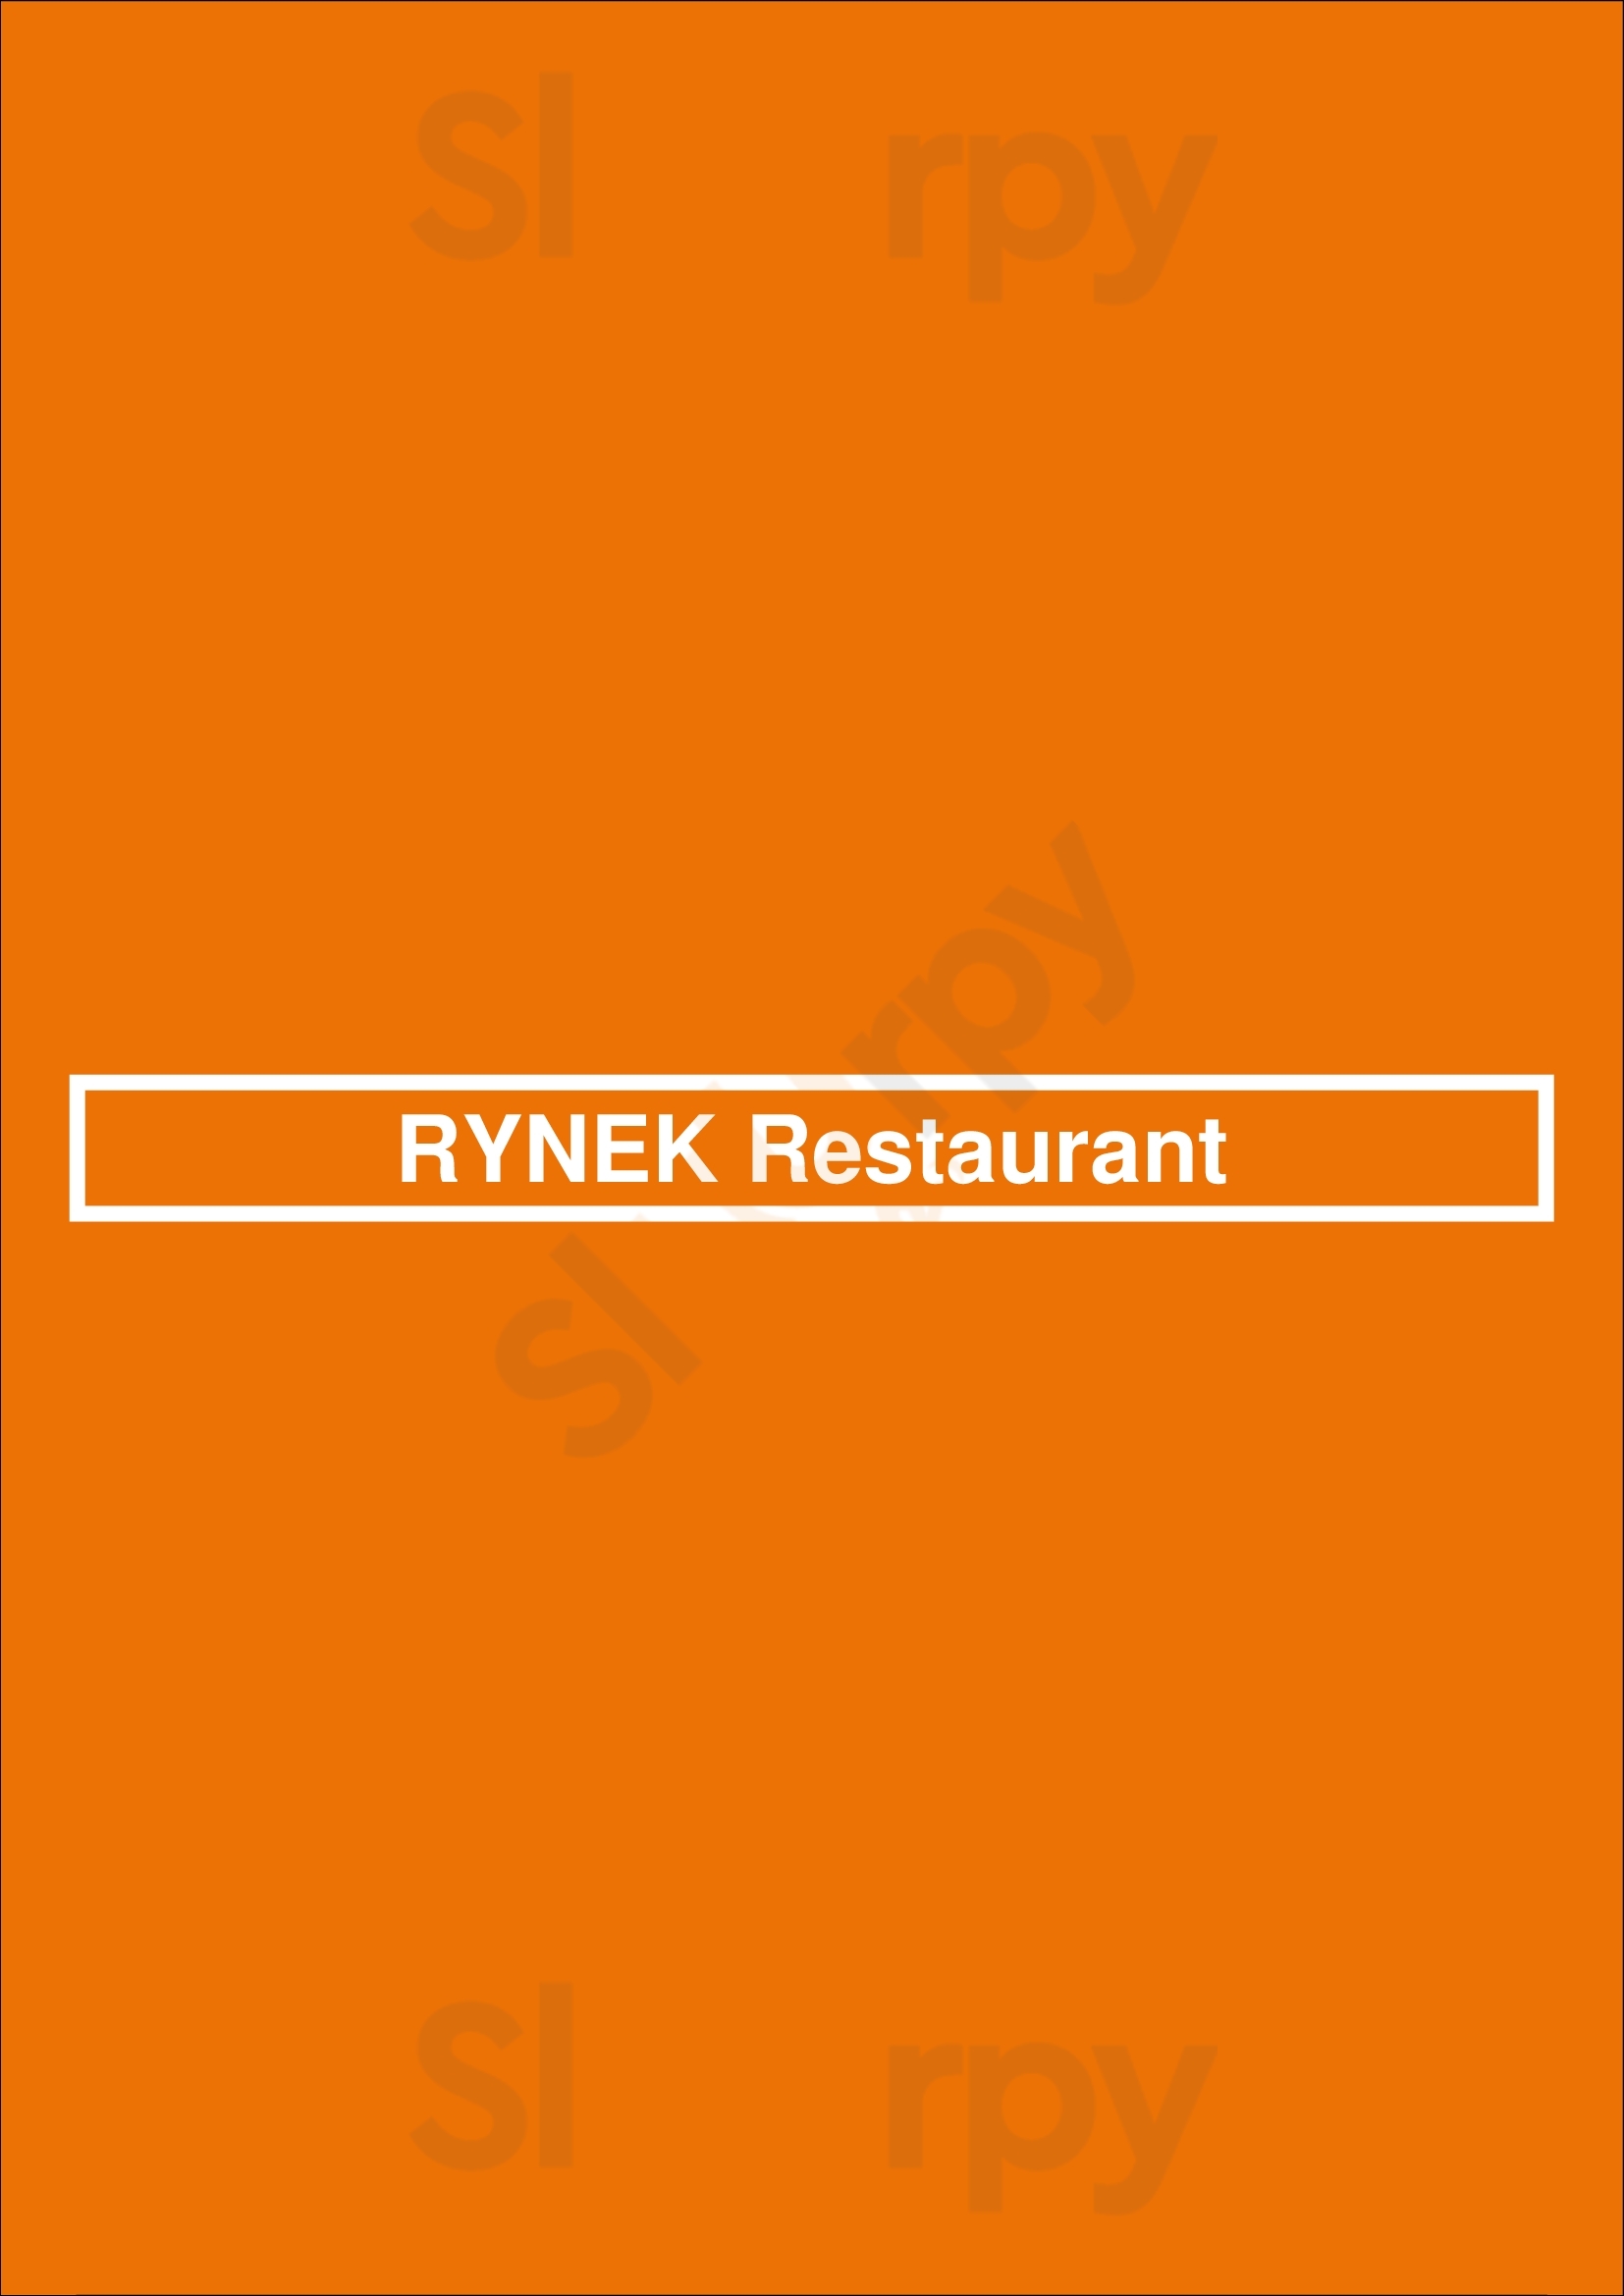 Rynek Restaurant Poznań Menu - 1